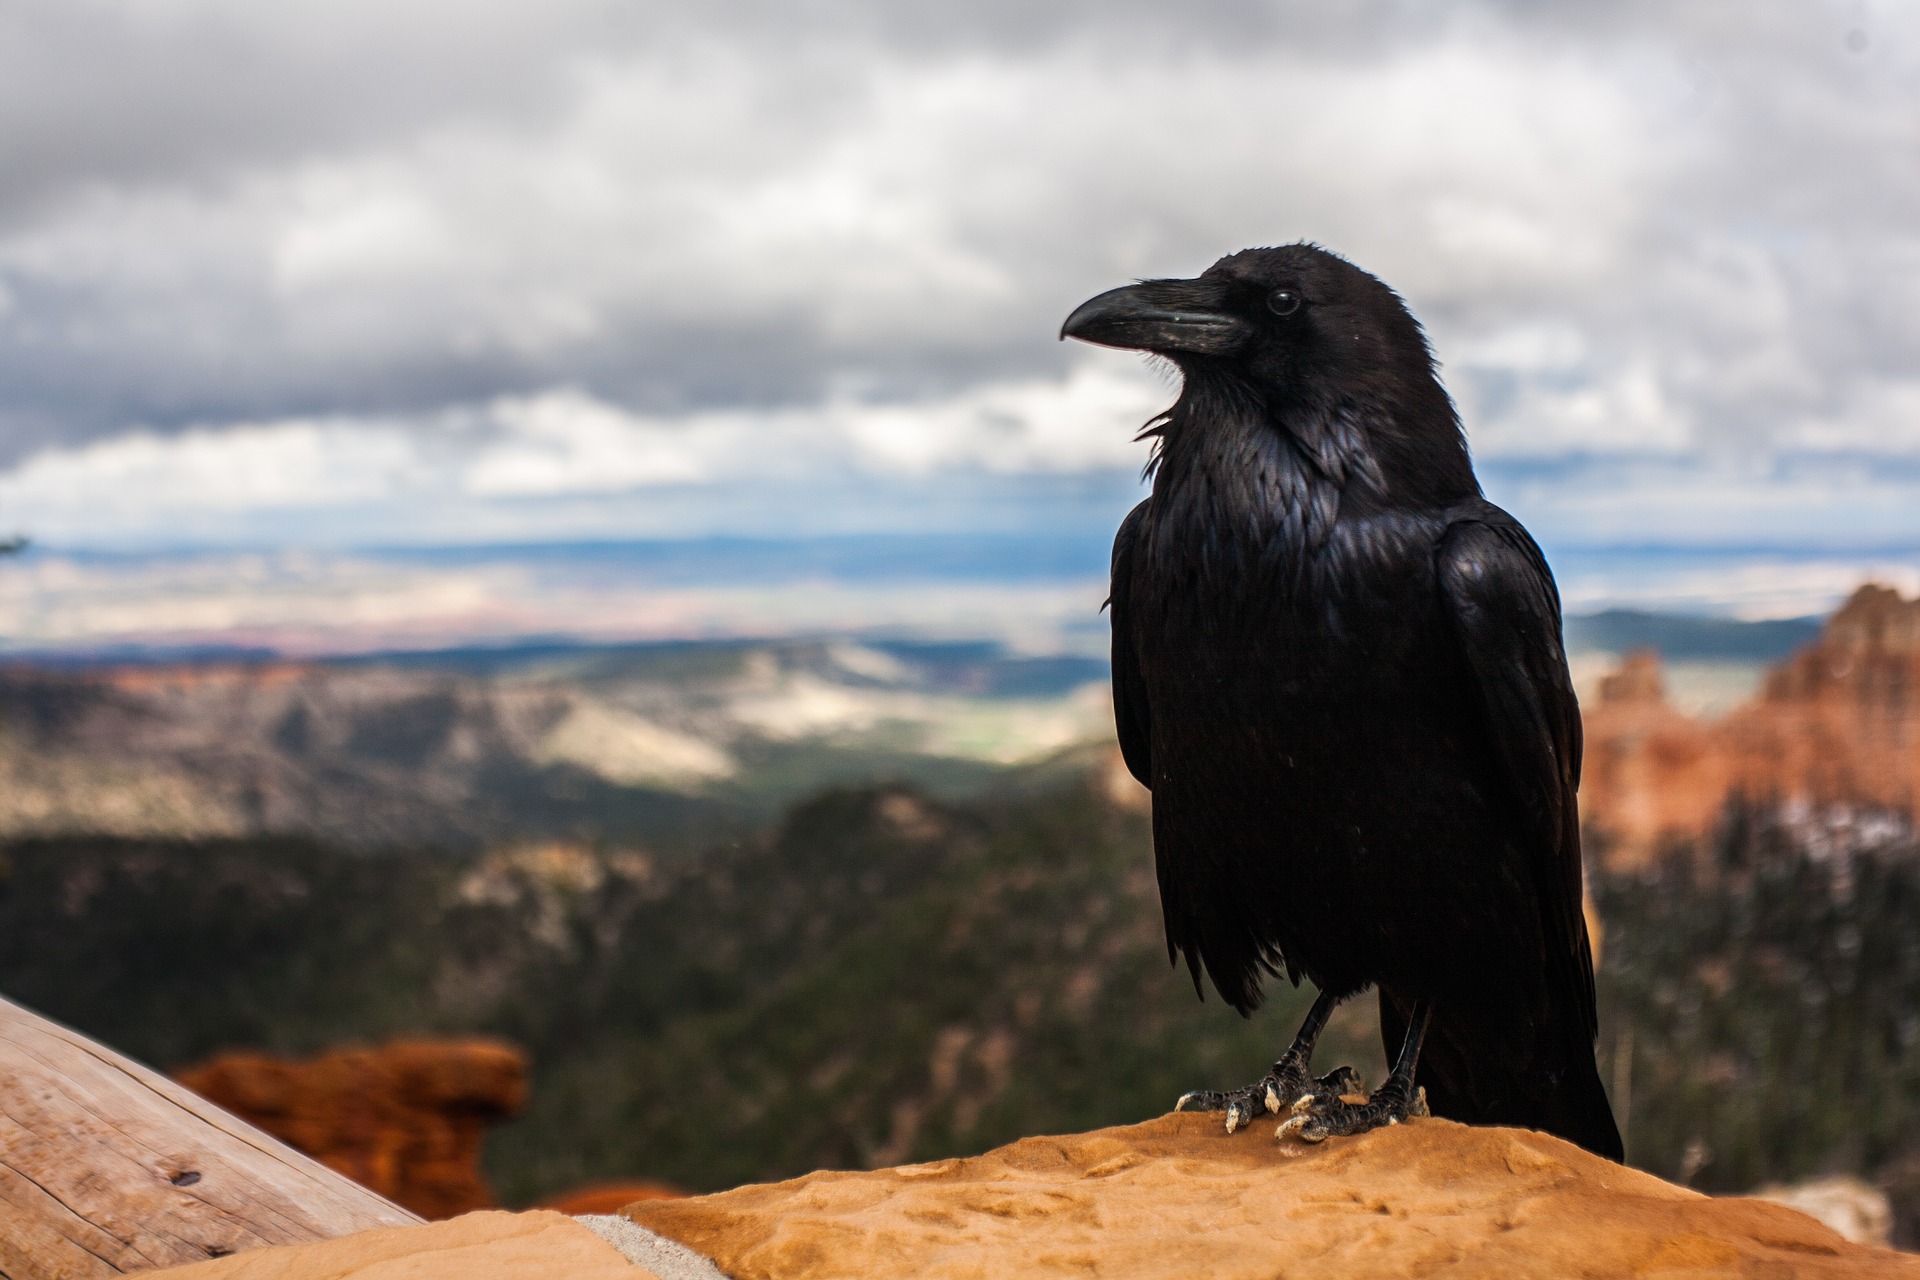 Spirit of Blackbird: Transmuting Fear in Uncertain Times